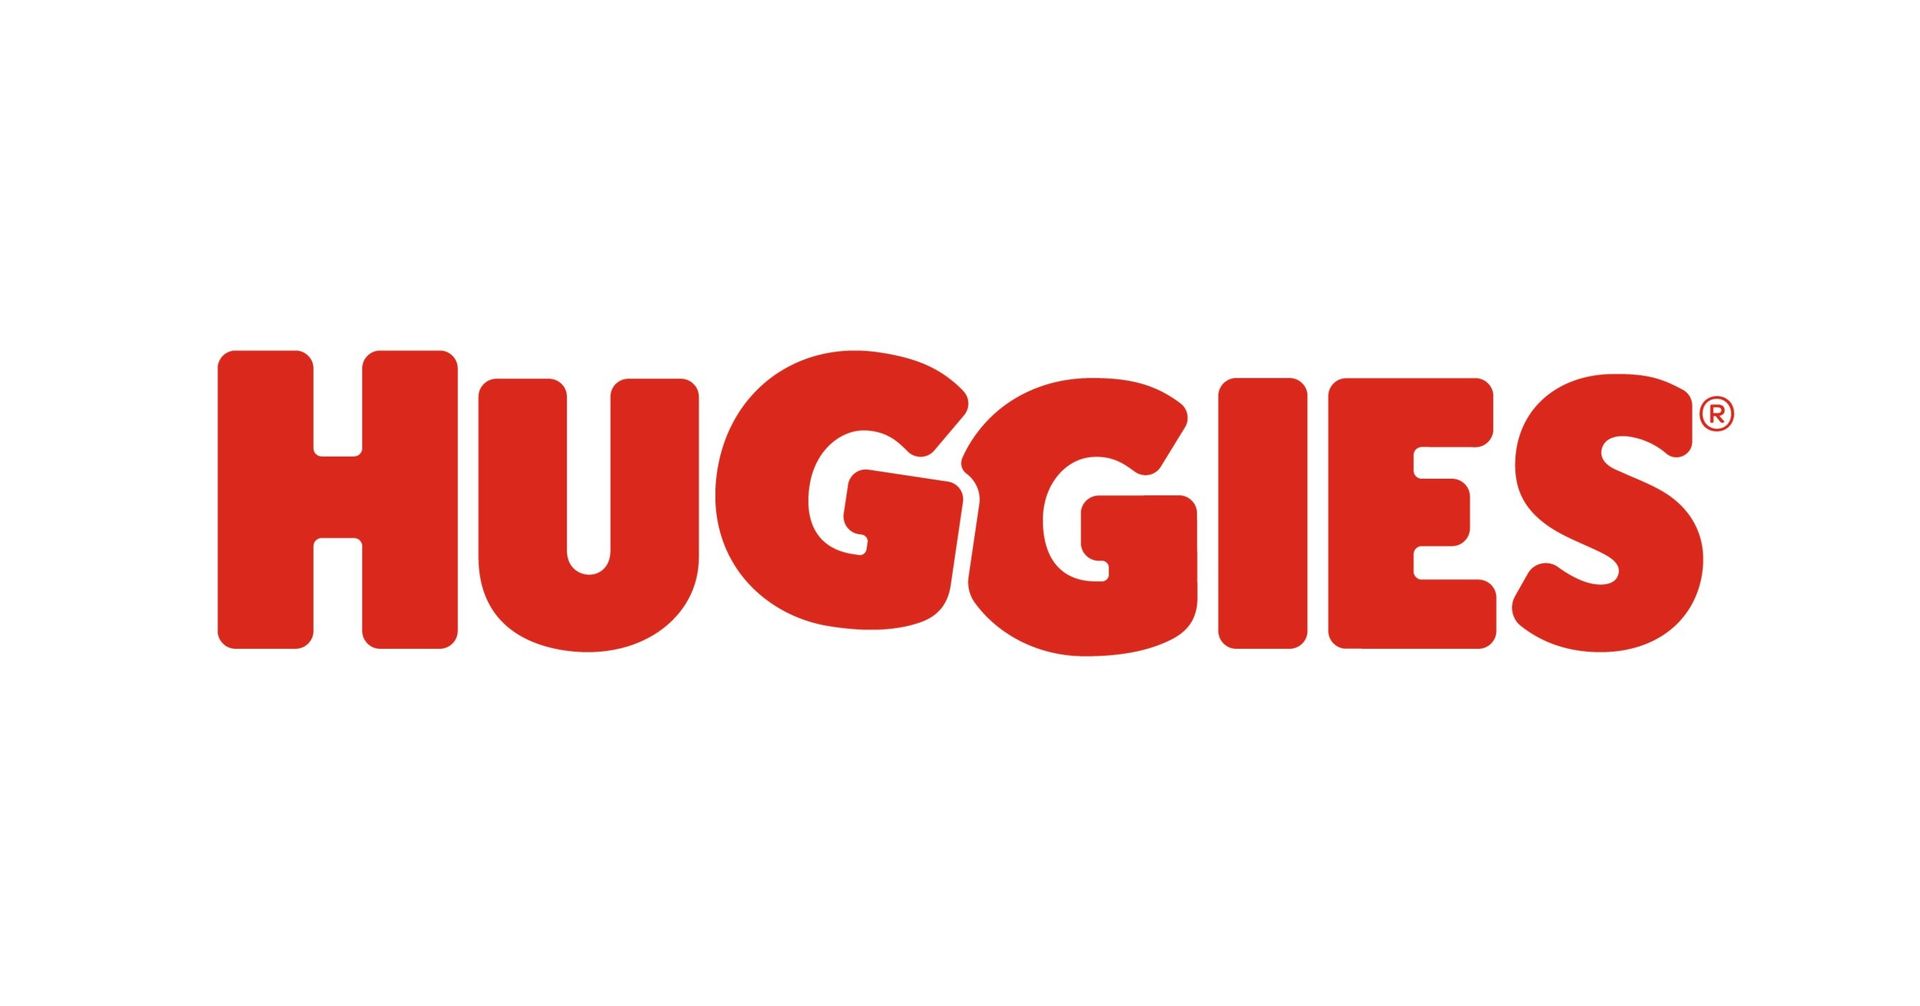 Brand: Huggies